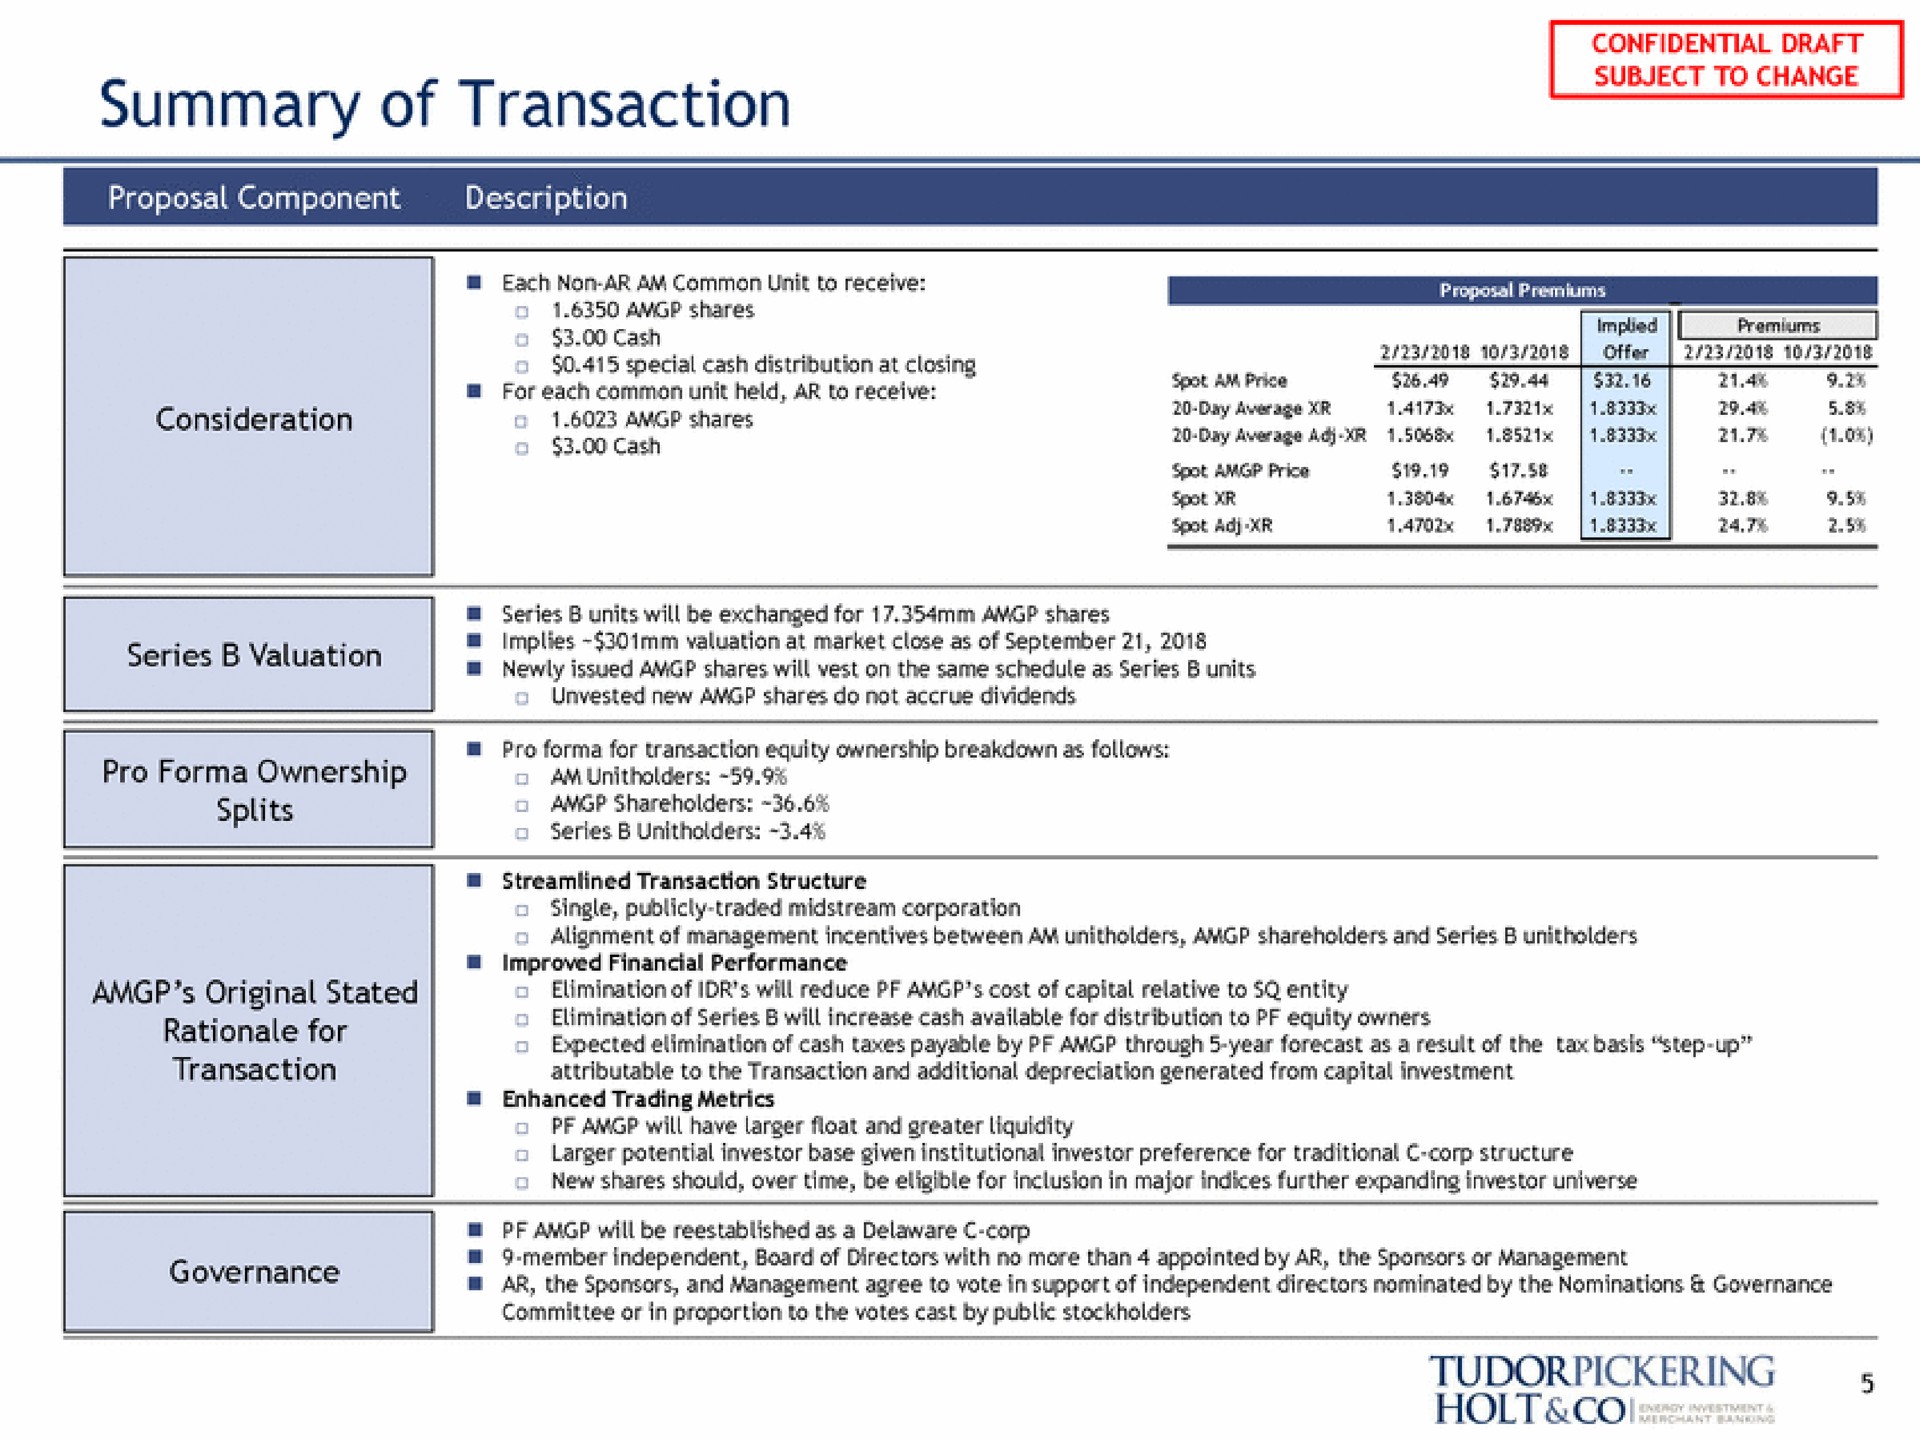 summary of transaction holt | Tudor, Pickering, Holt & Co